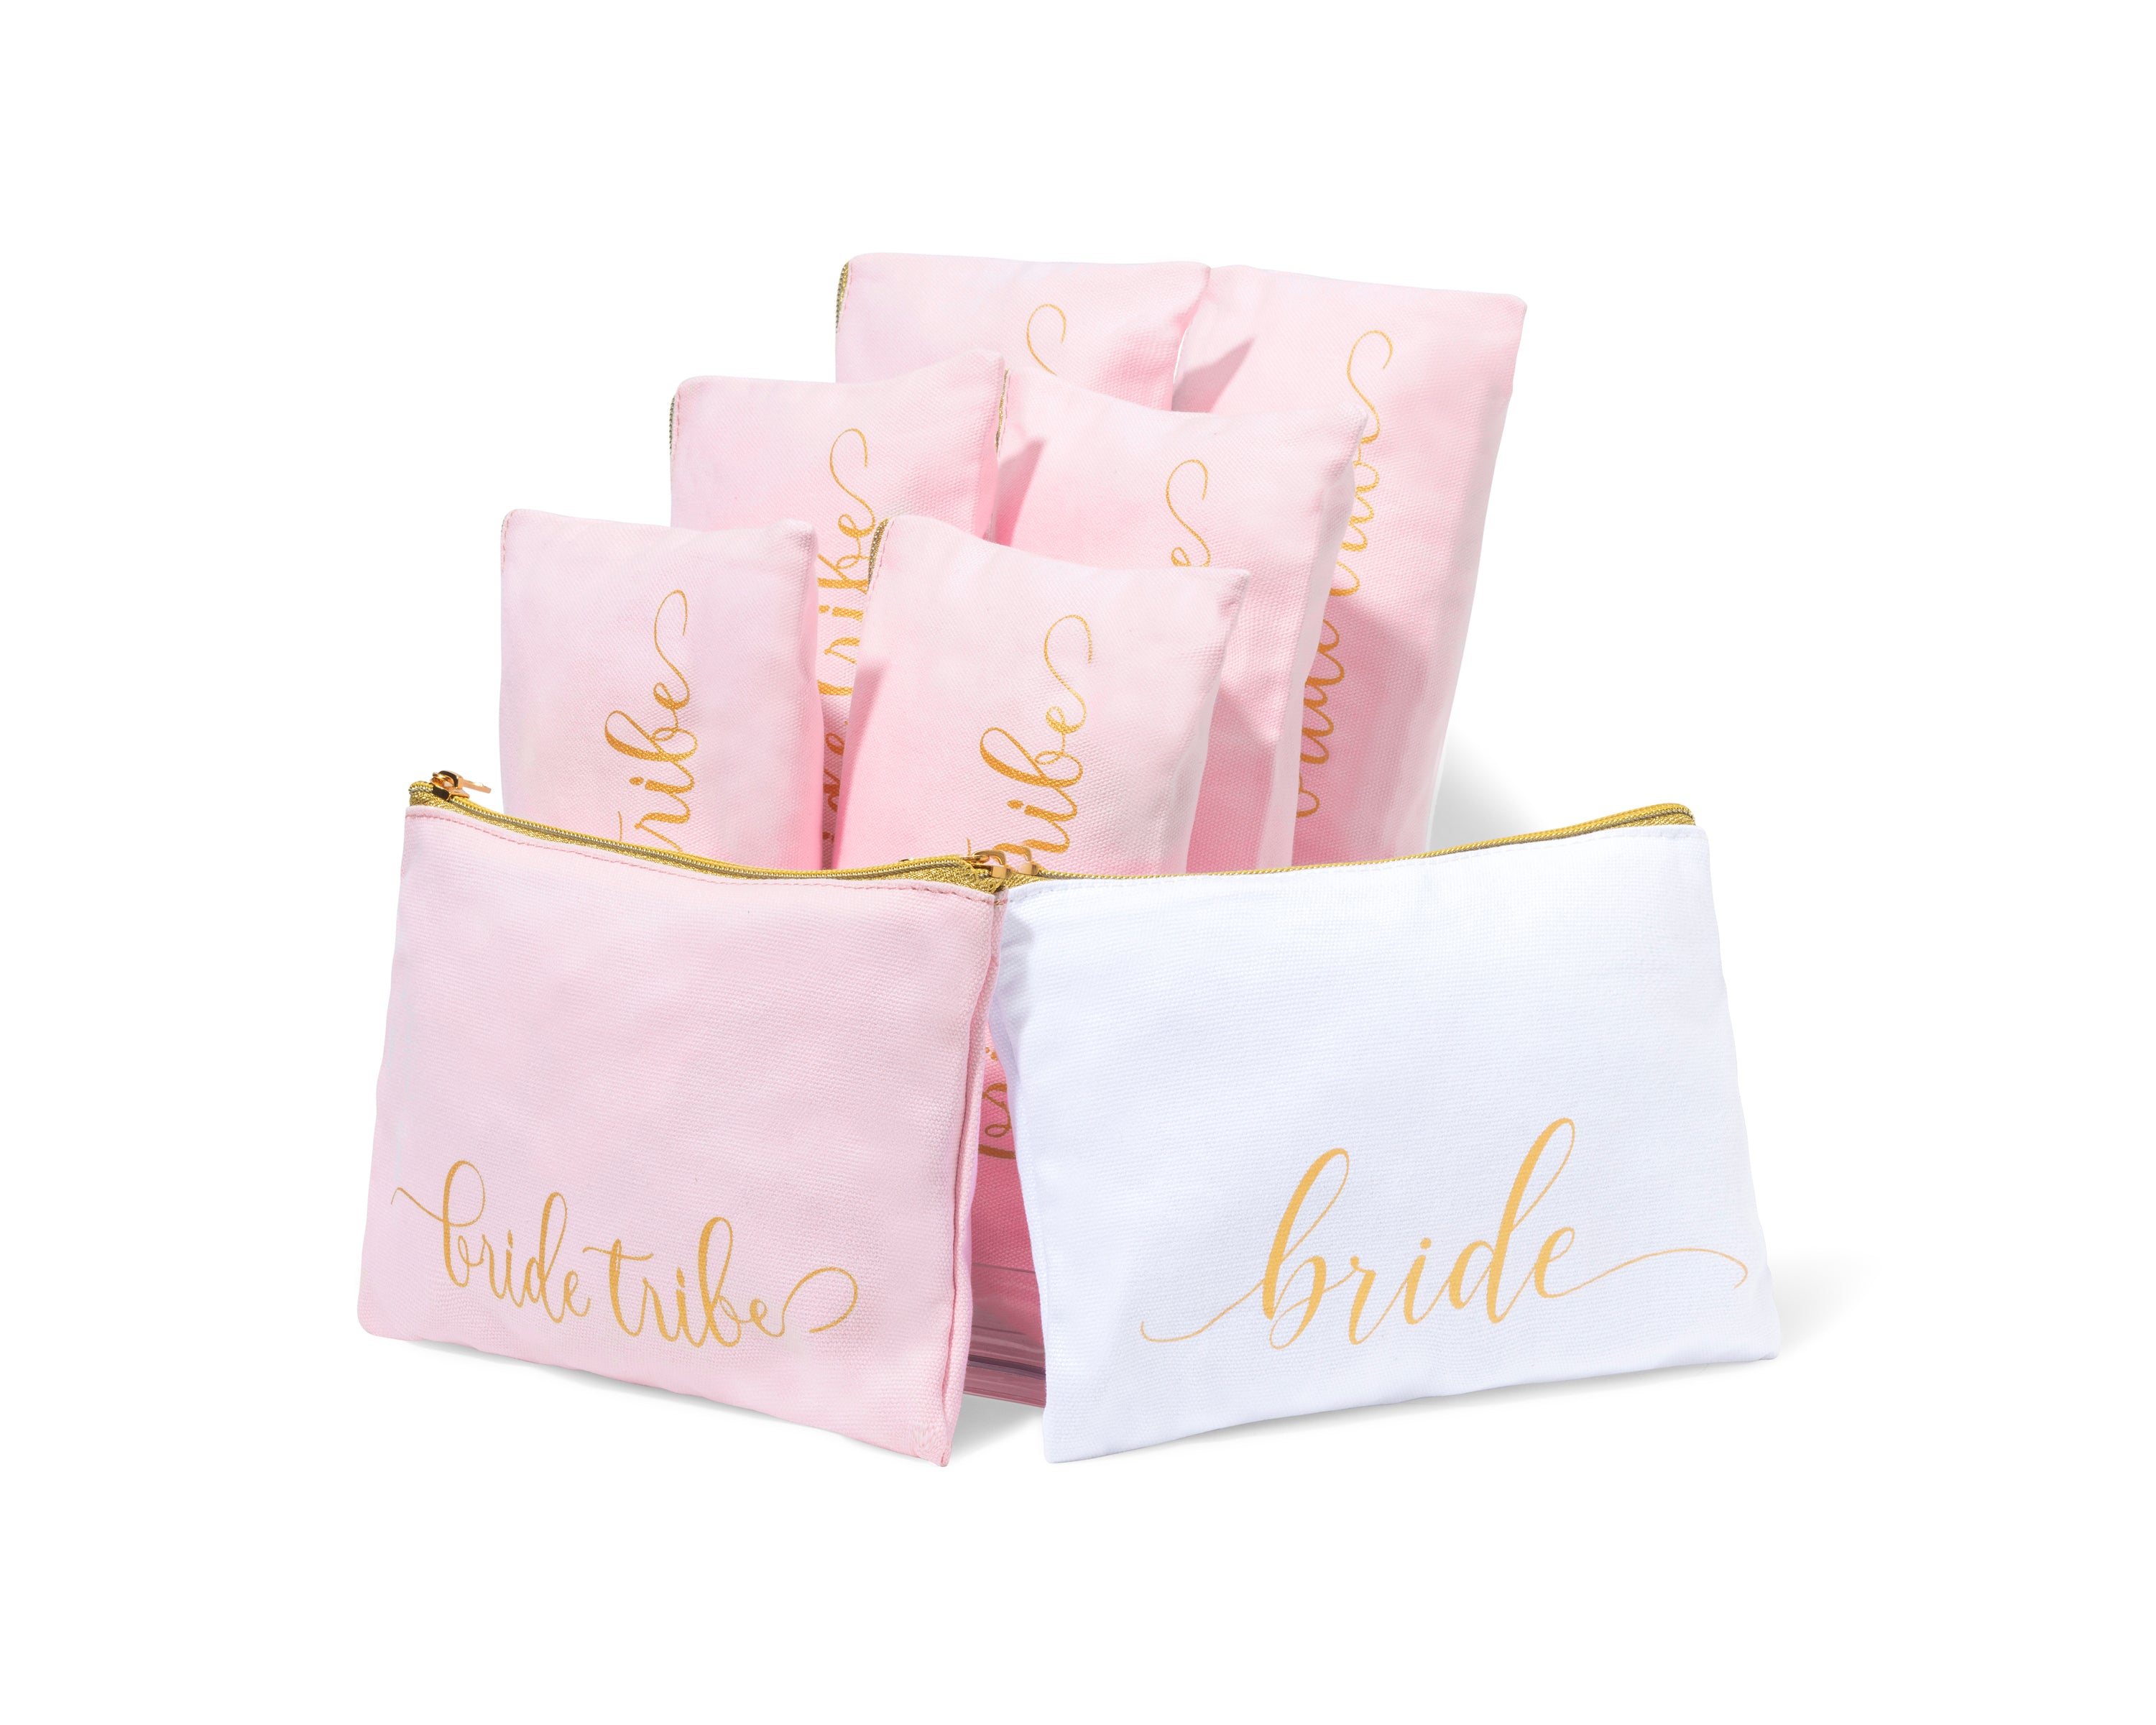 Bride Tribe Bridesmaid Canvas Makeup Bags Cosmetic Clutch (Blush) | 8 Piece Set